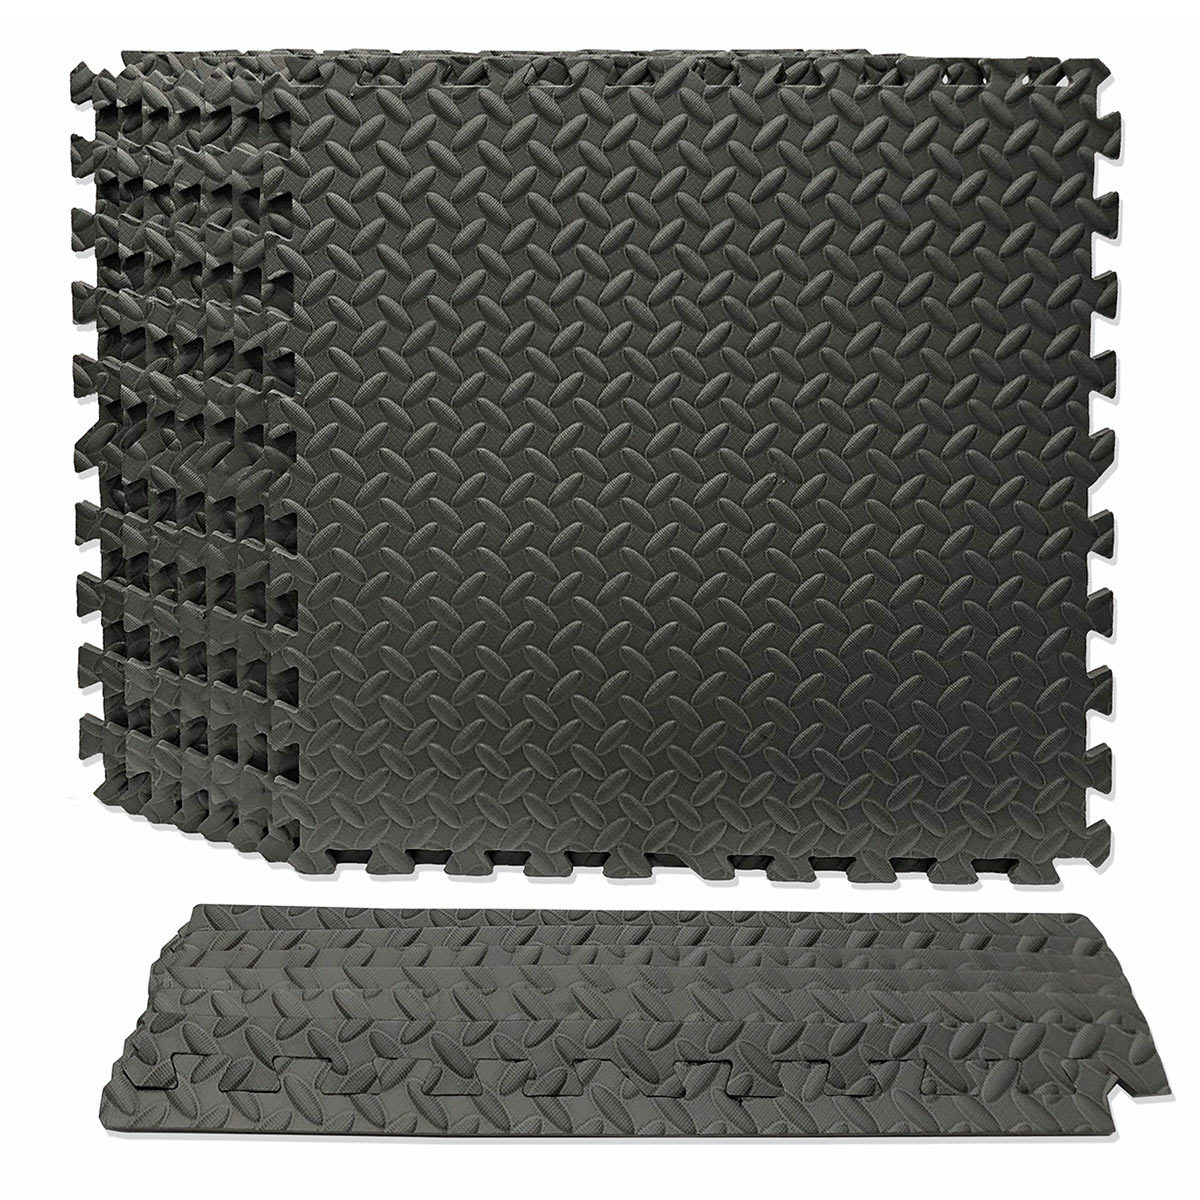 Interlocking Floor Mats Garage Gym Utility Tile Black Flooring Rubber Soft Foam 